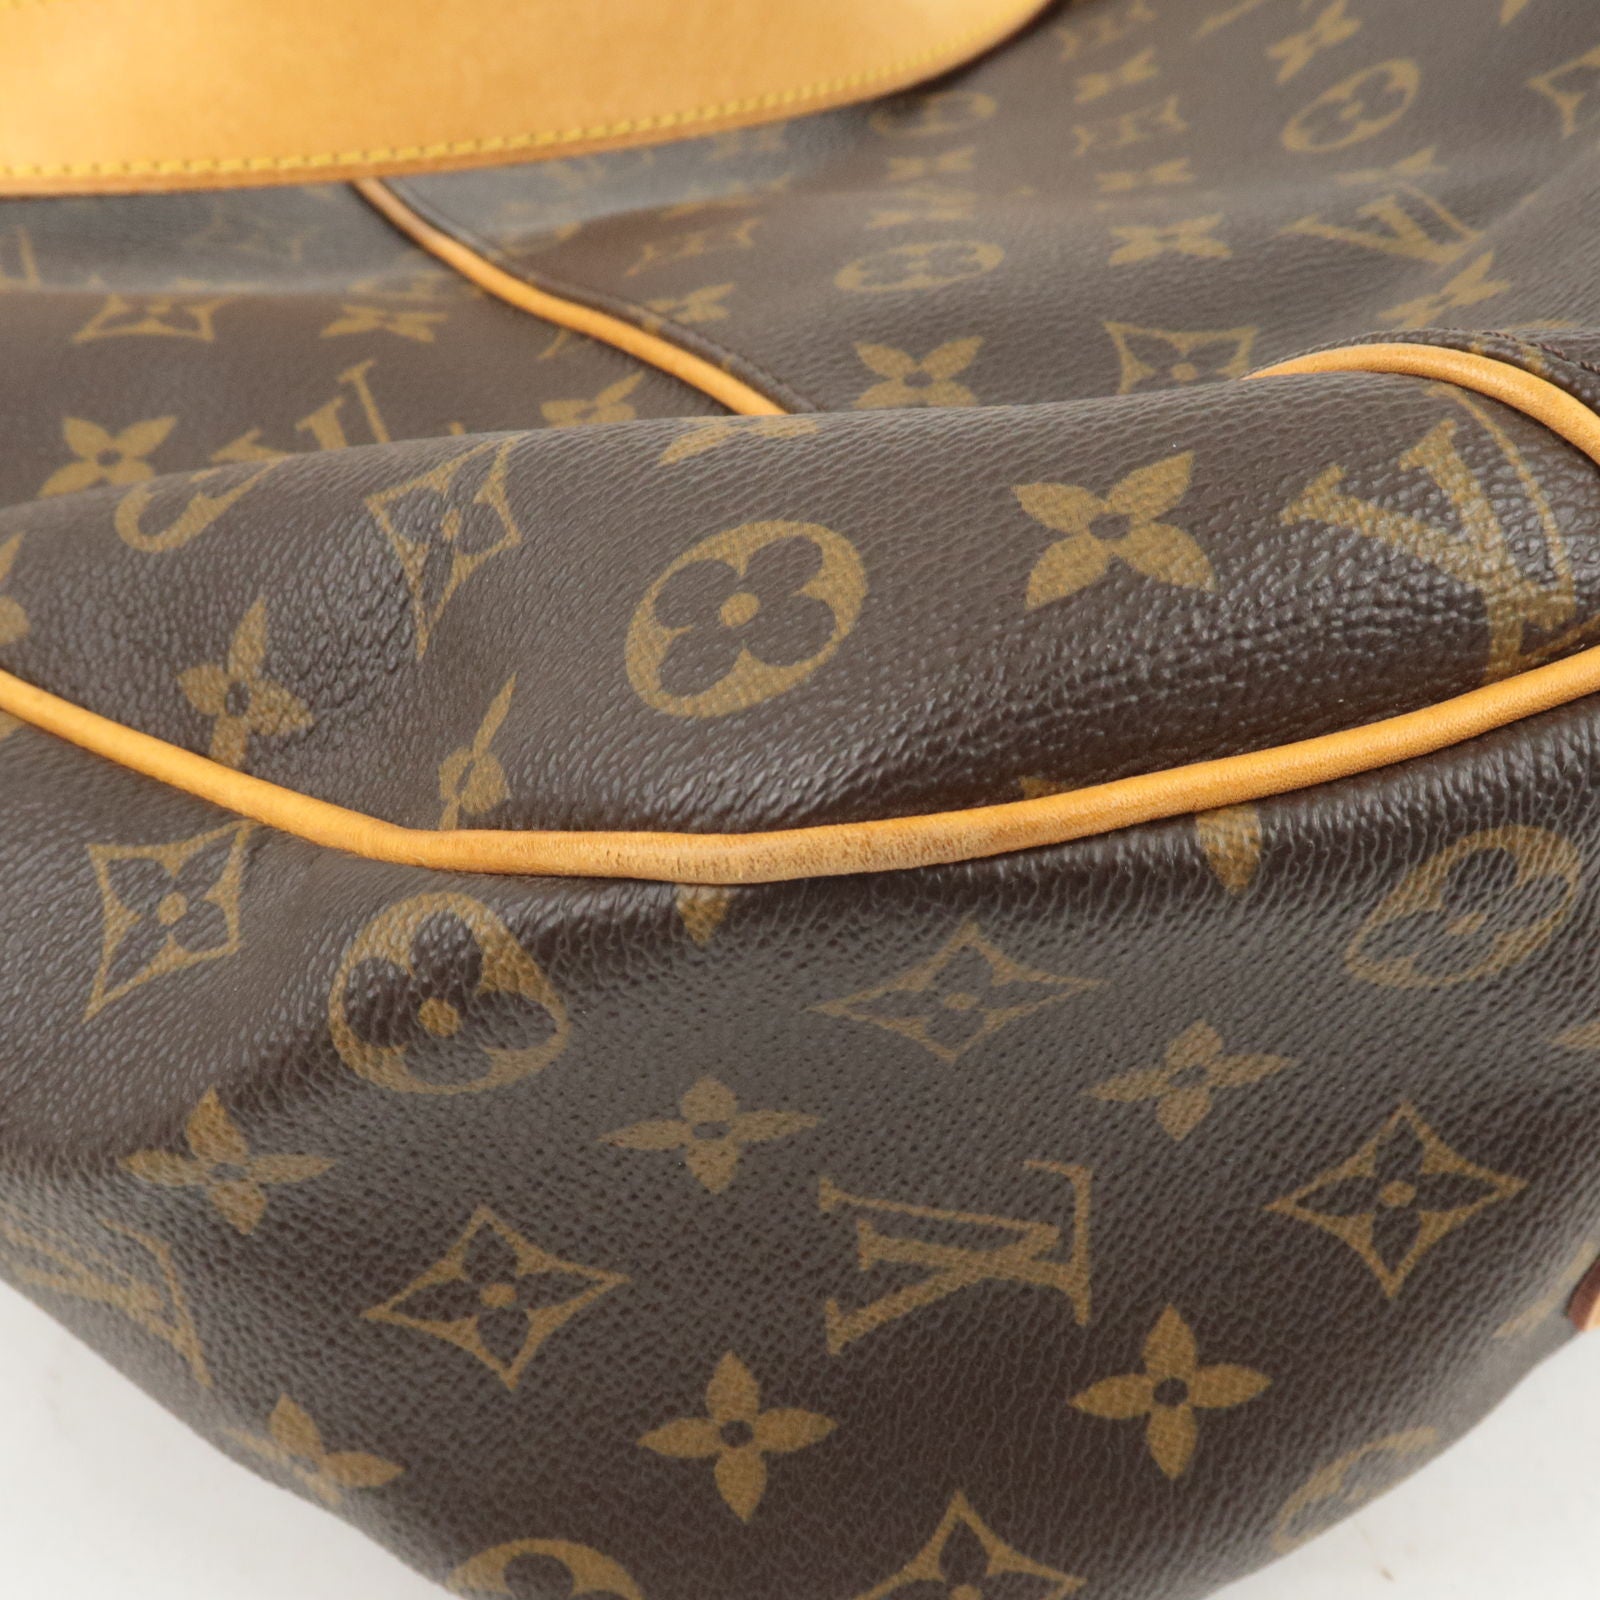 Louis Vuitton, Bags, Louis Vuitton Galleria Pm Bag With Long Lv Strap